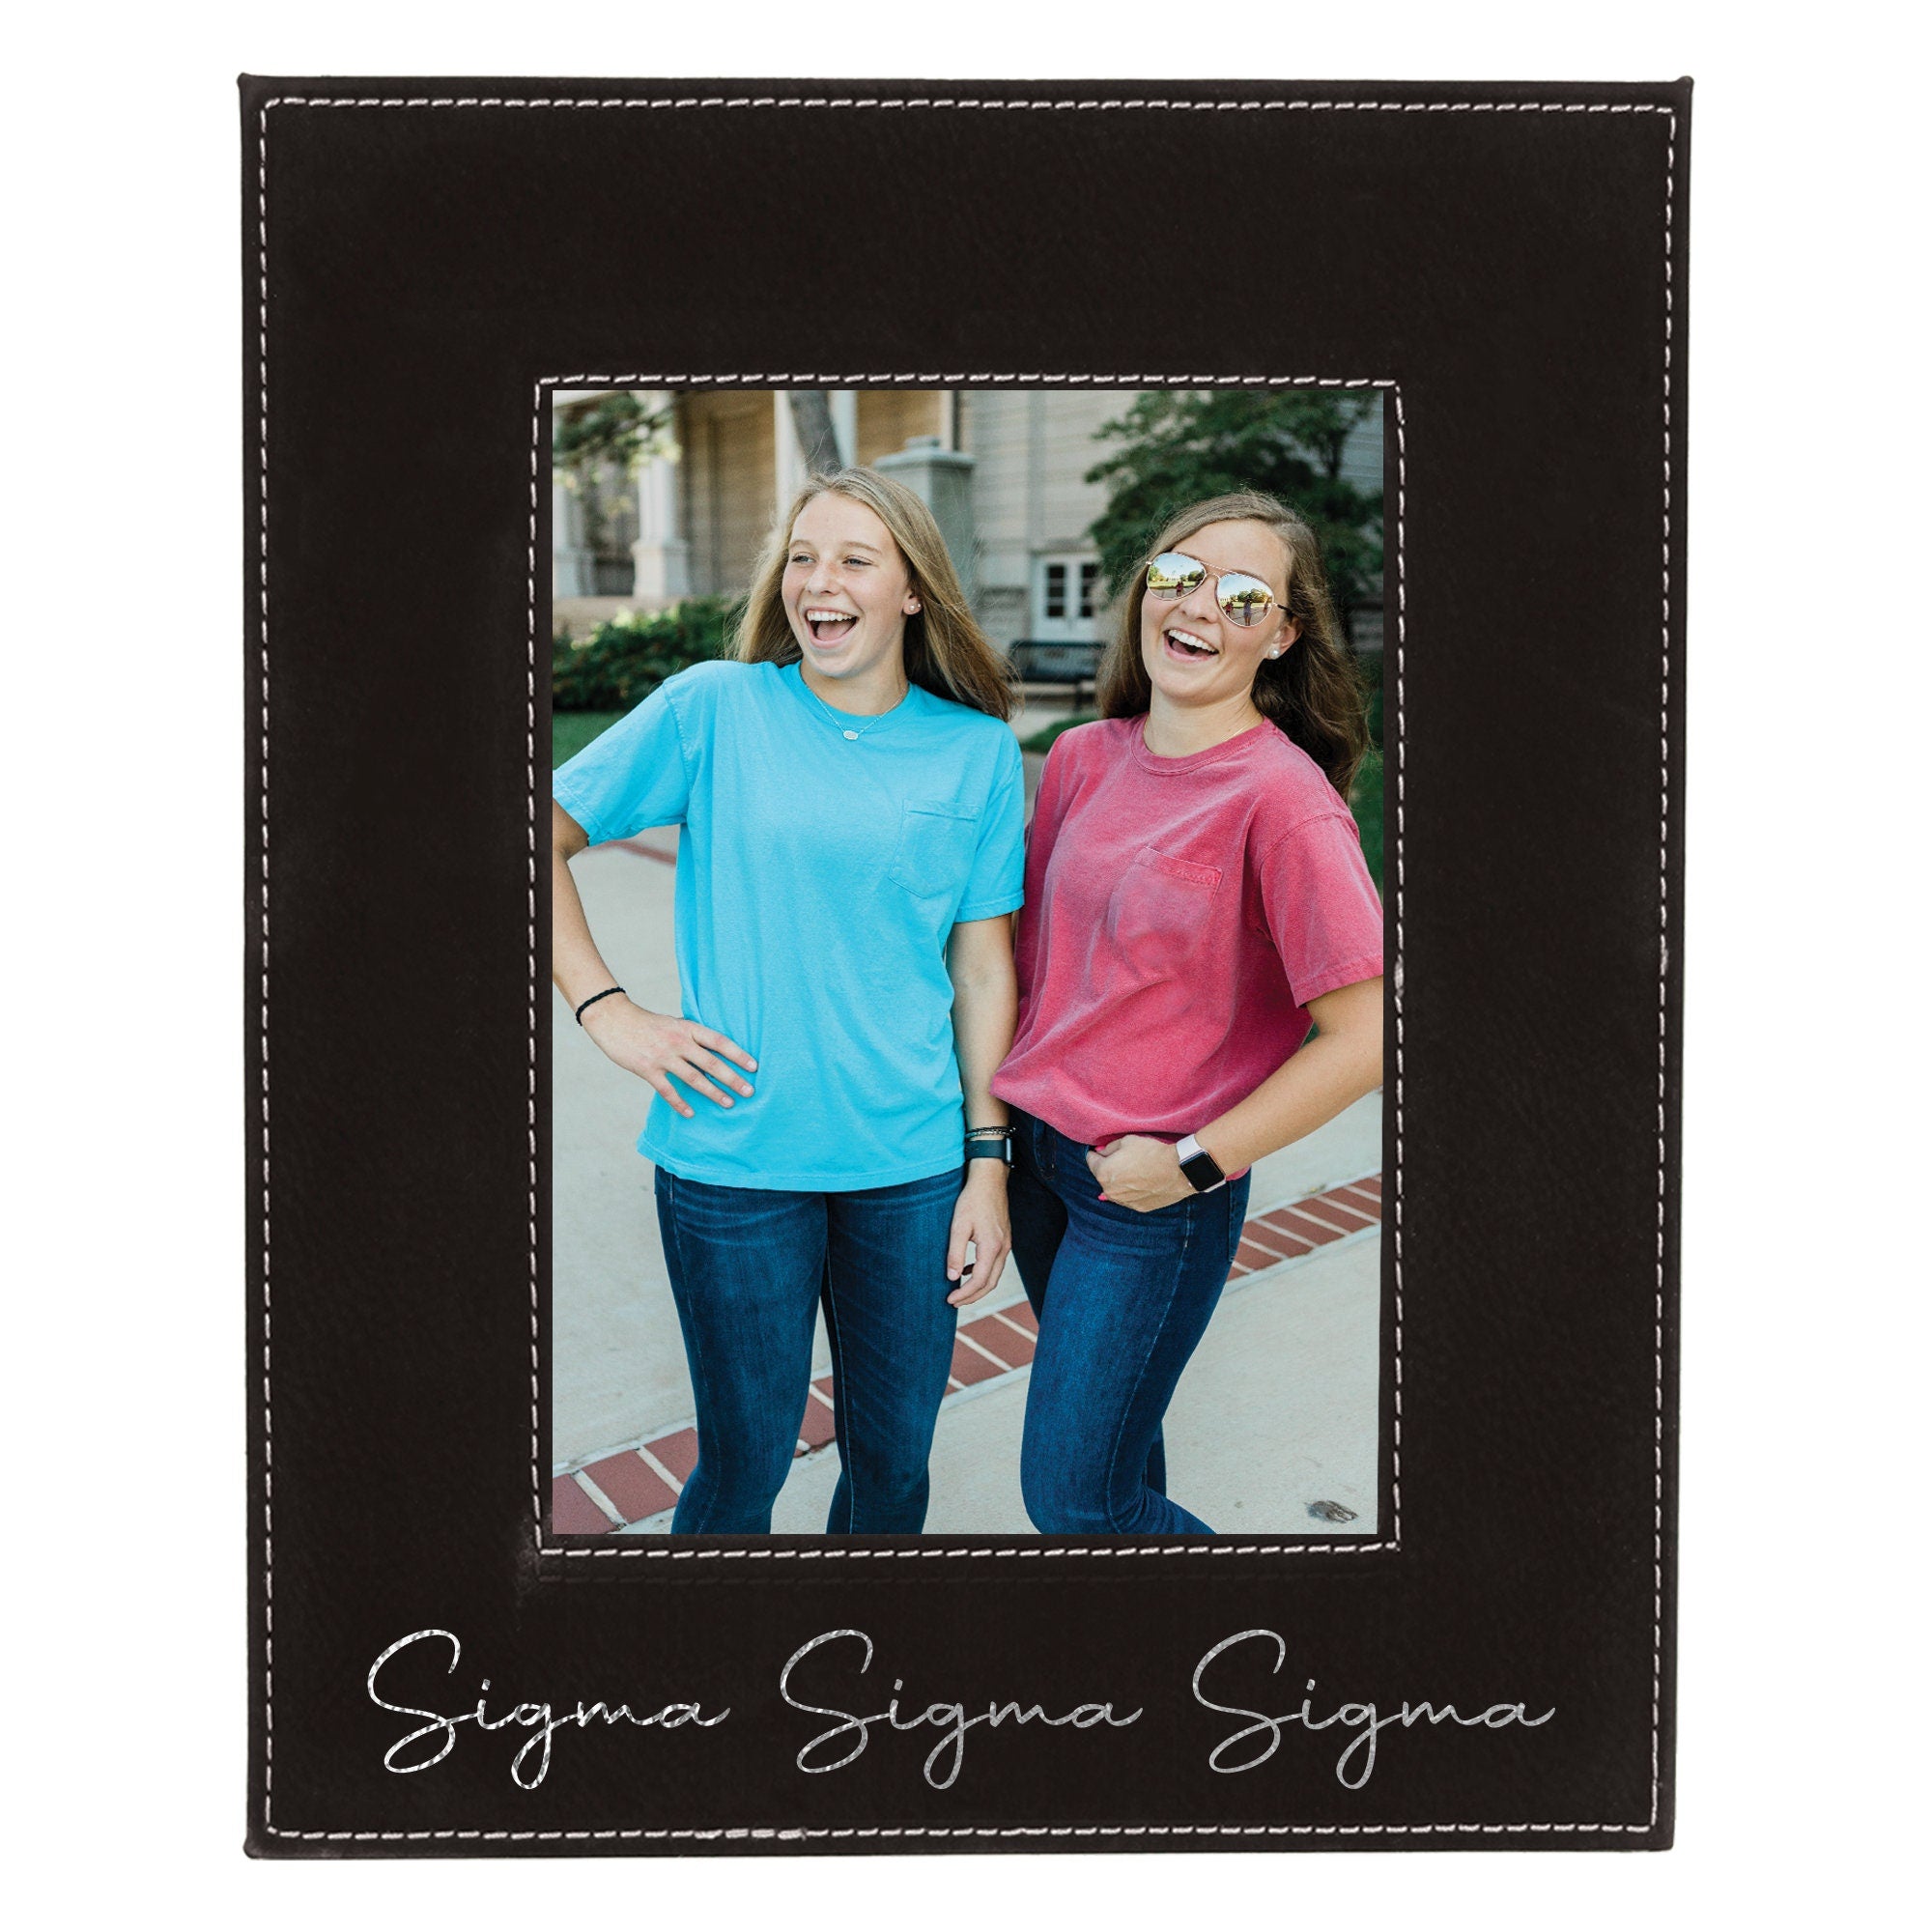 Sigma Sigma Sigma | 5x7 Picture Frame | Sorority Gift - Go Greek Chic